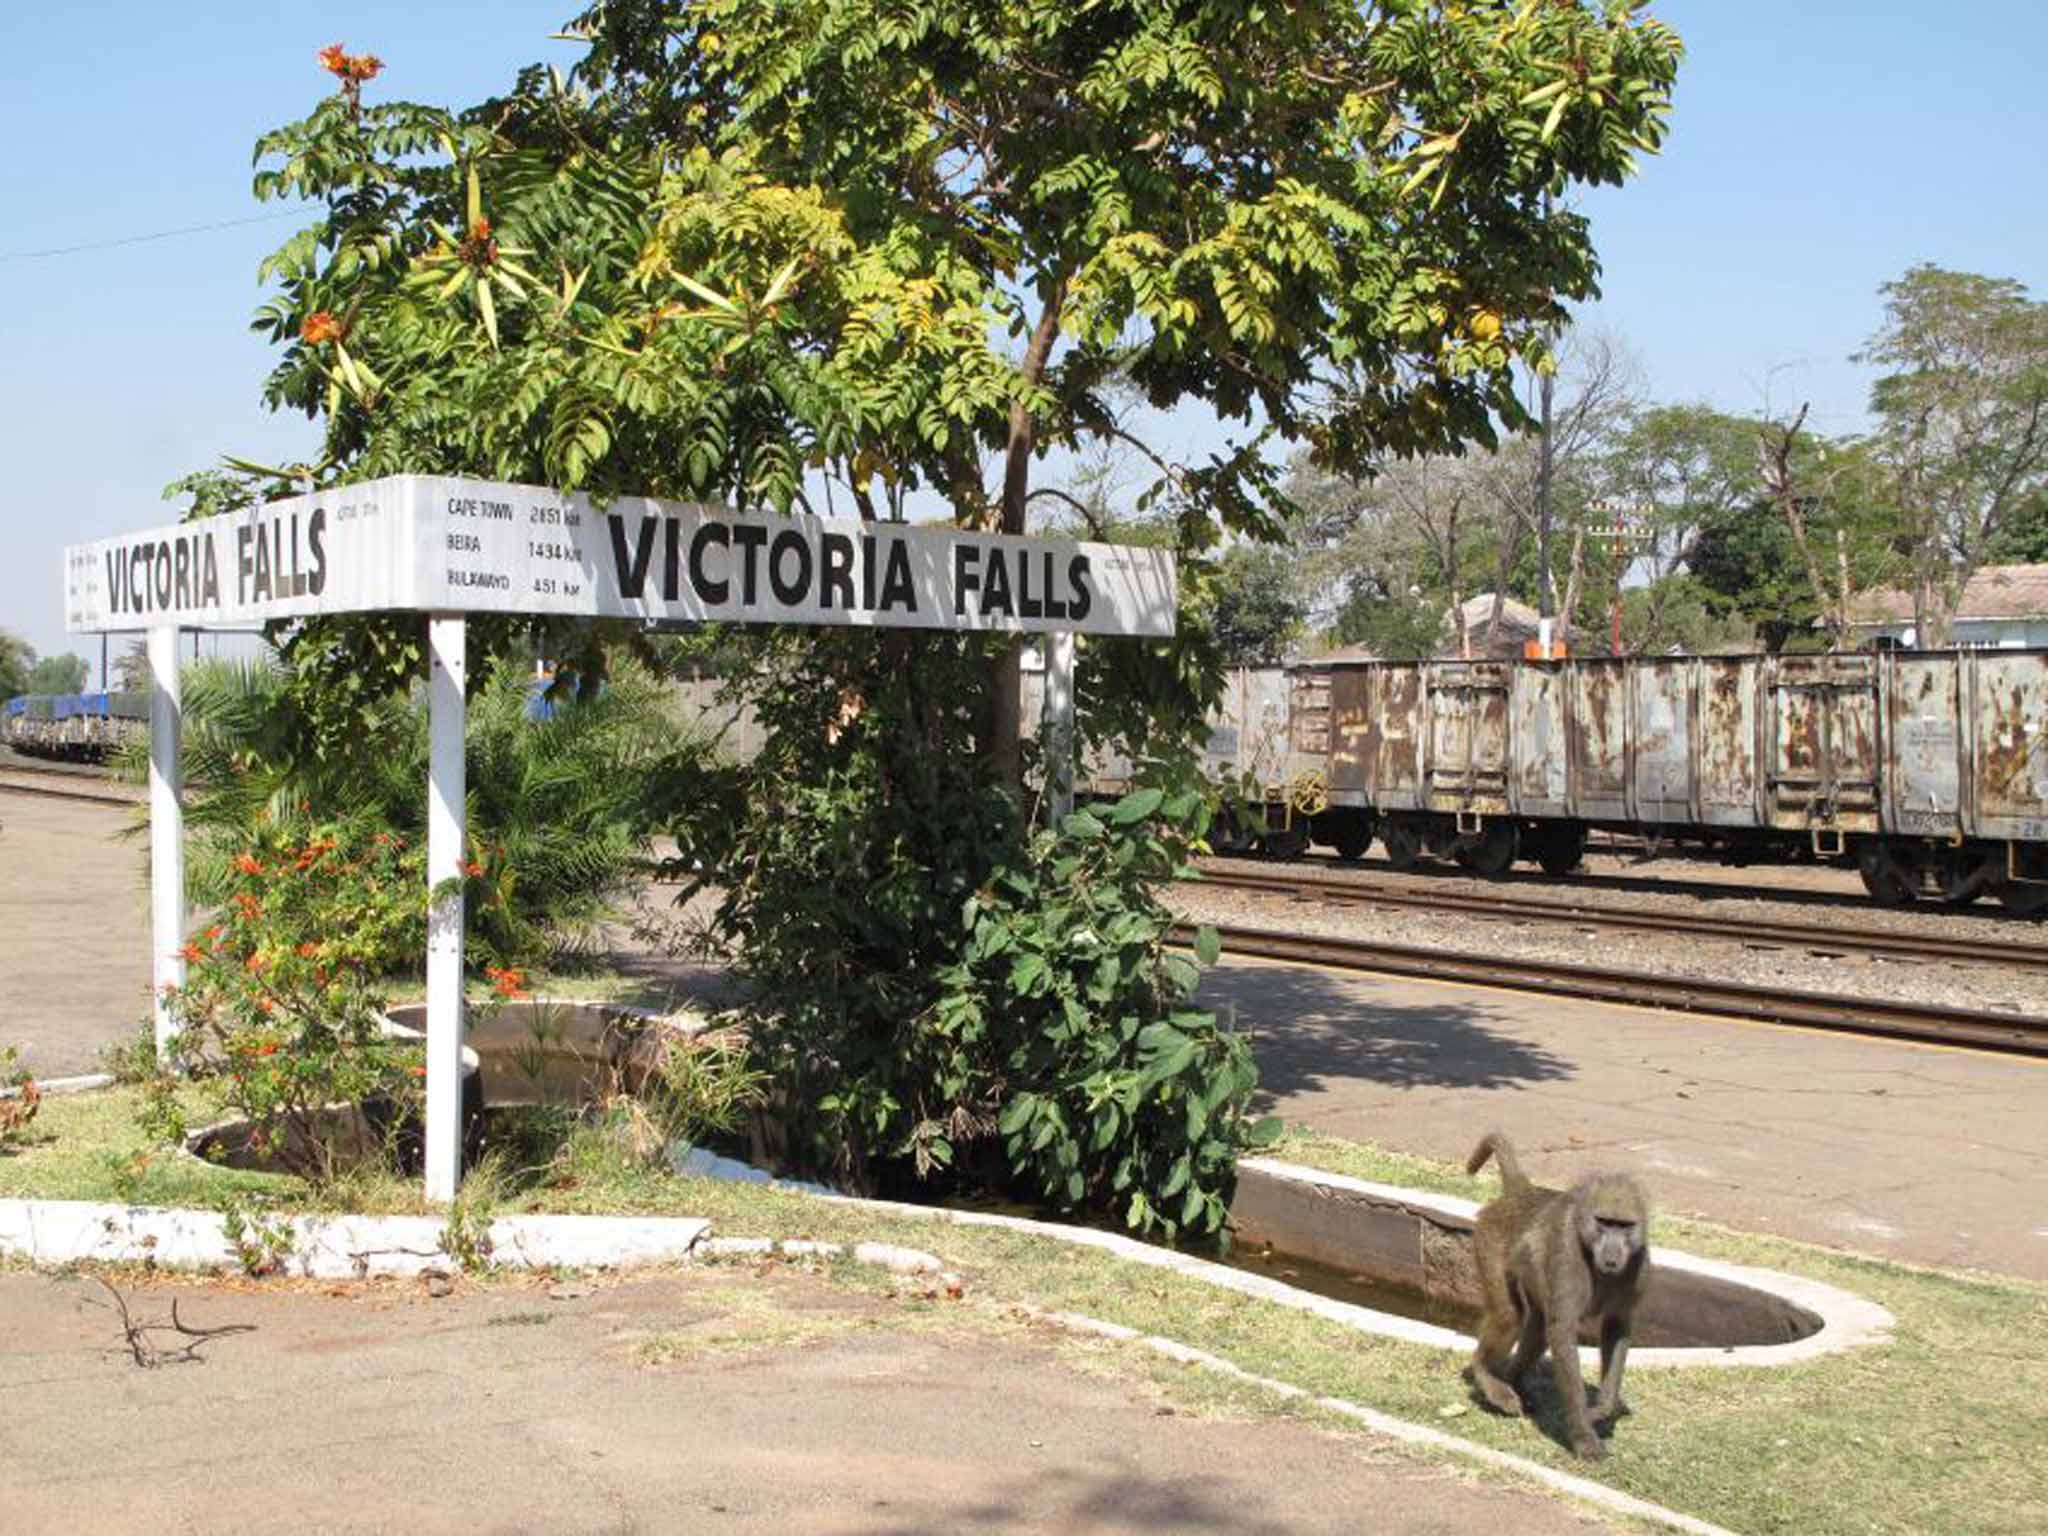 Monkeying around: Victoria Falls station